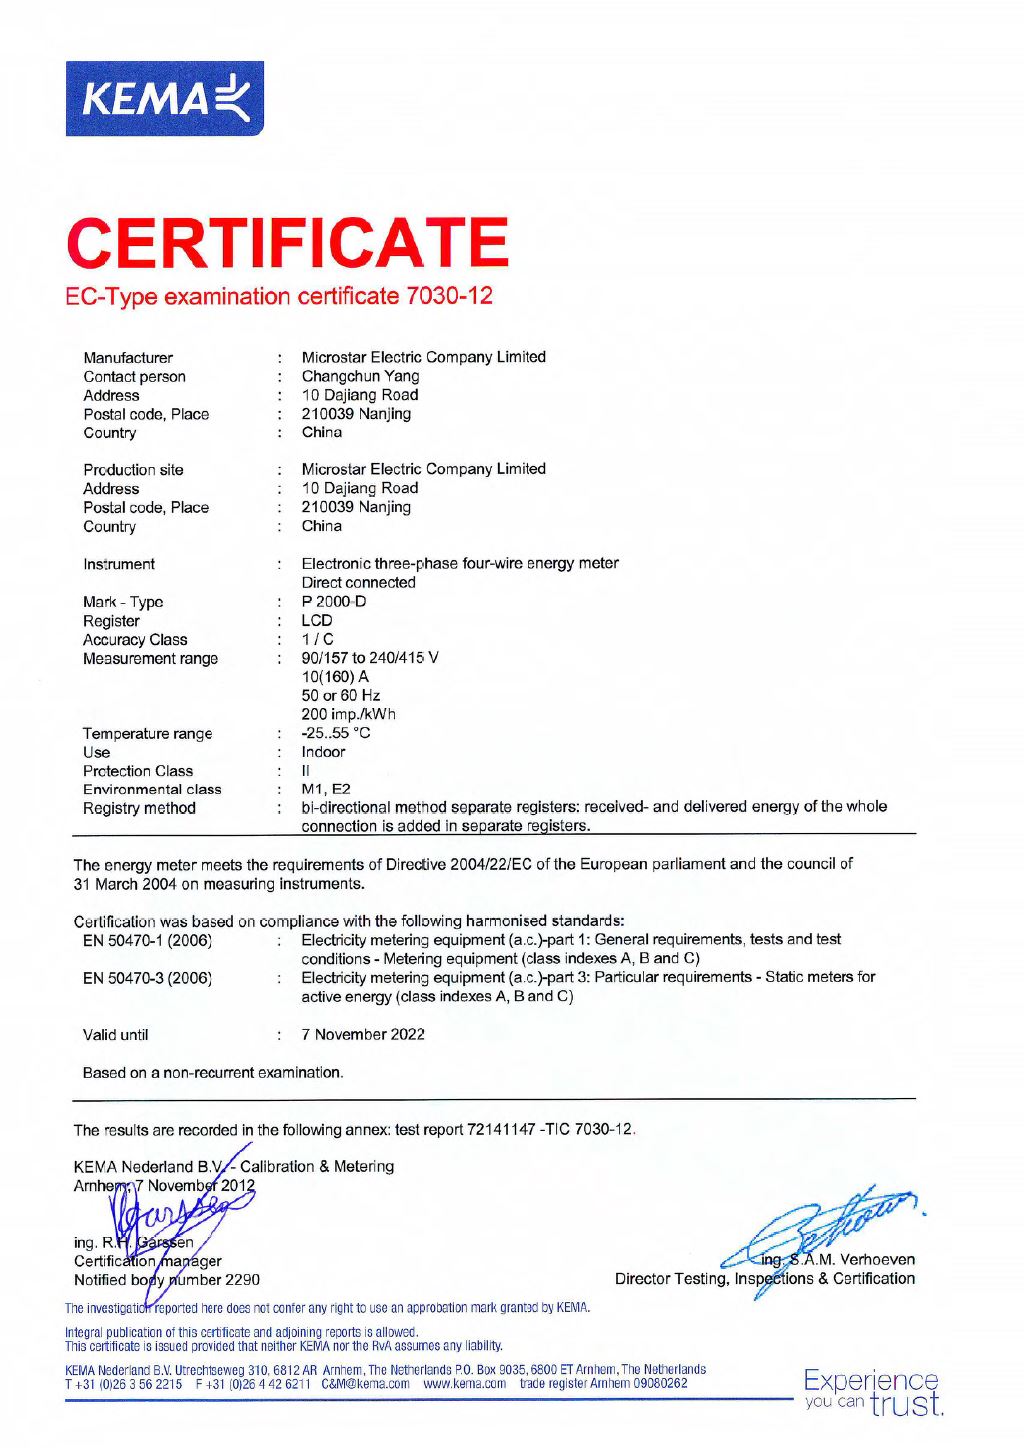 Microstar P2000-D Smart Meter MID Module B Certificate by KEMA Lab